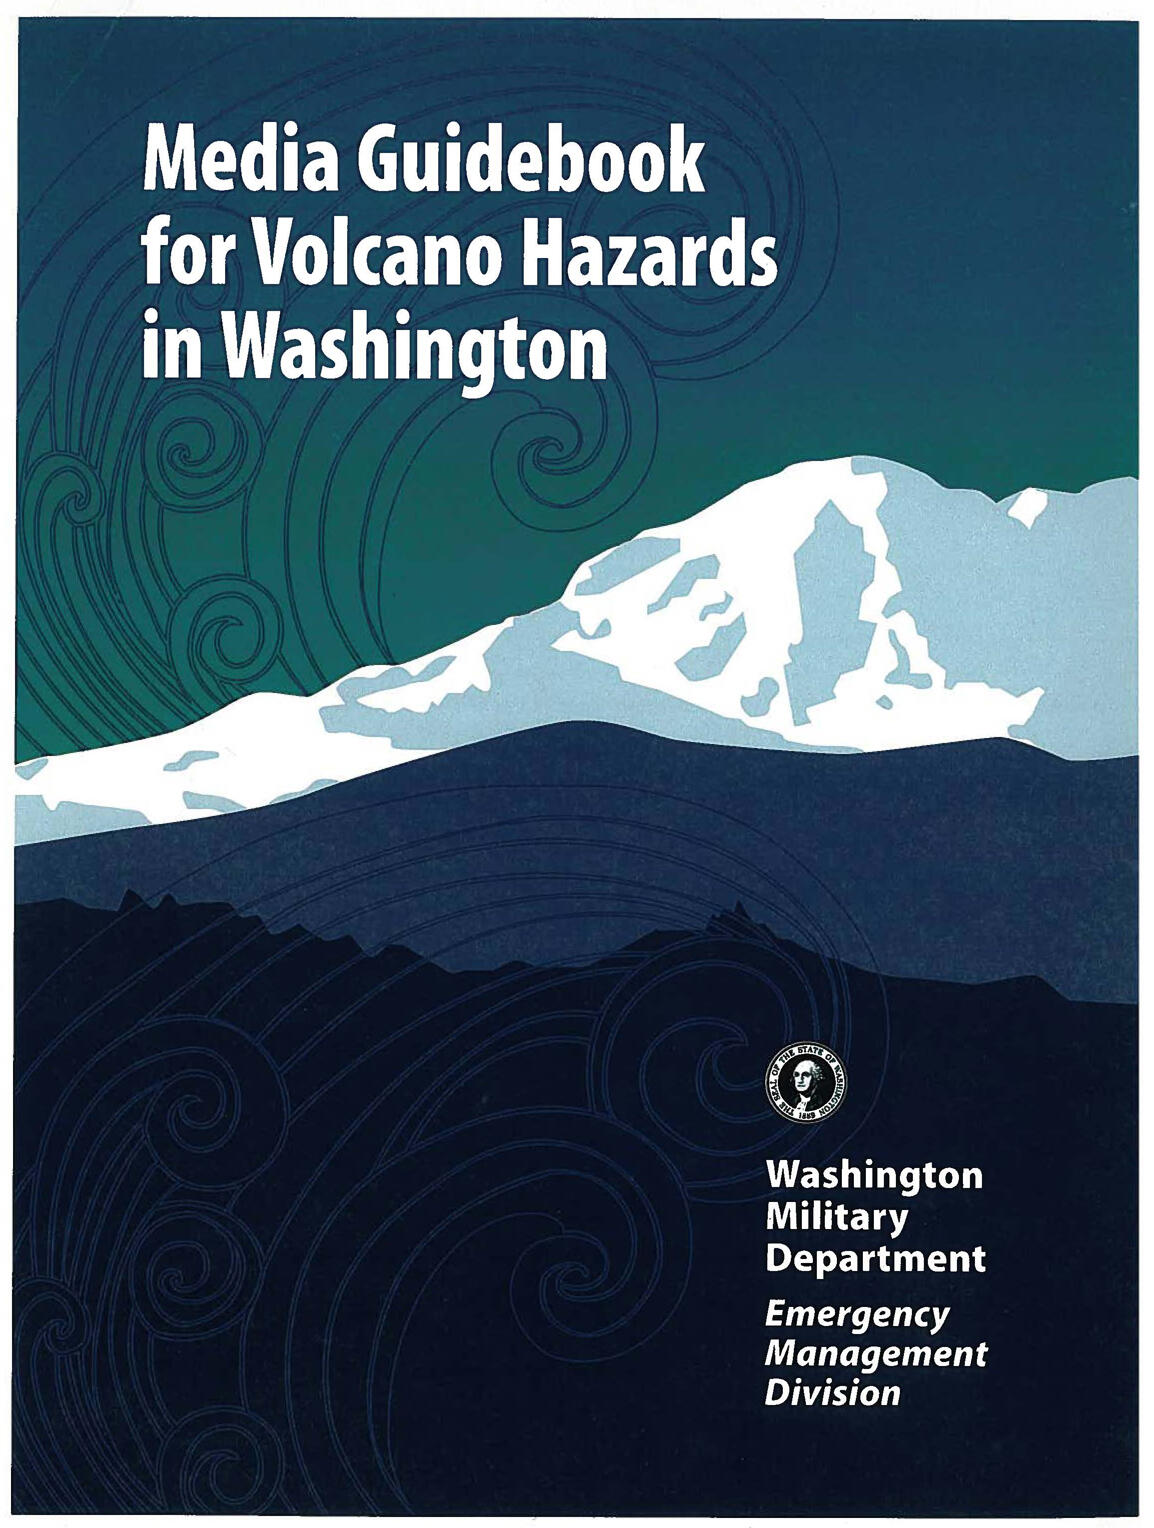 Cover art for Media Guidebook for Volcano Hazards in Washington....